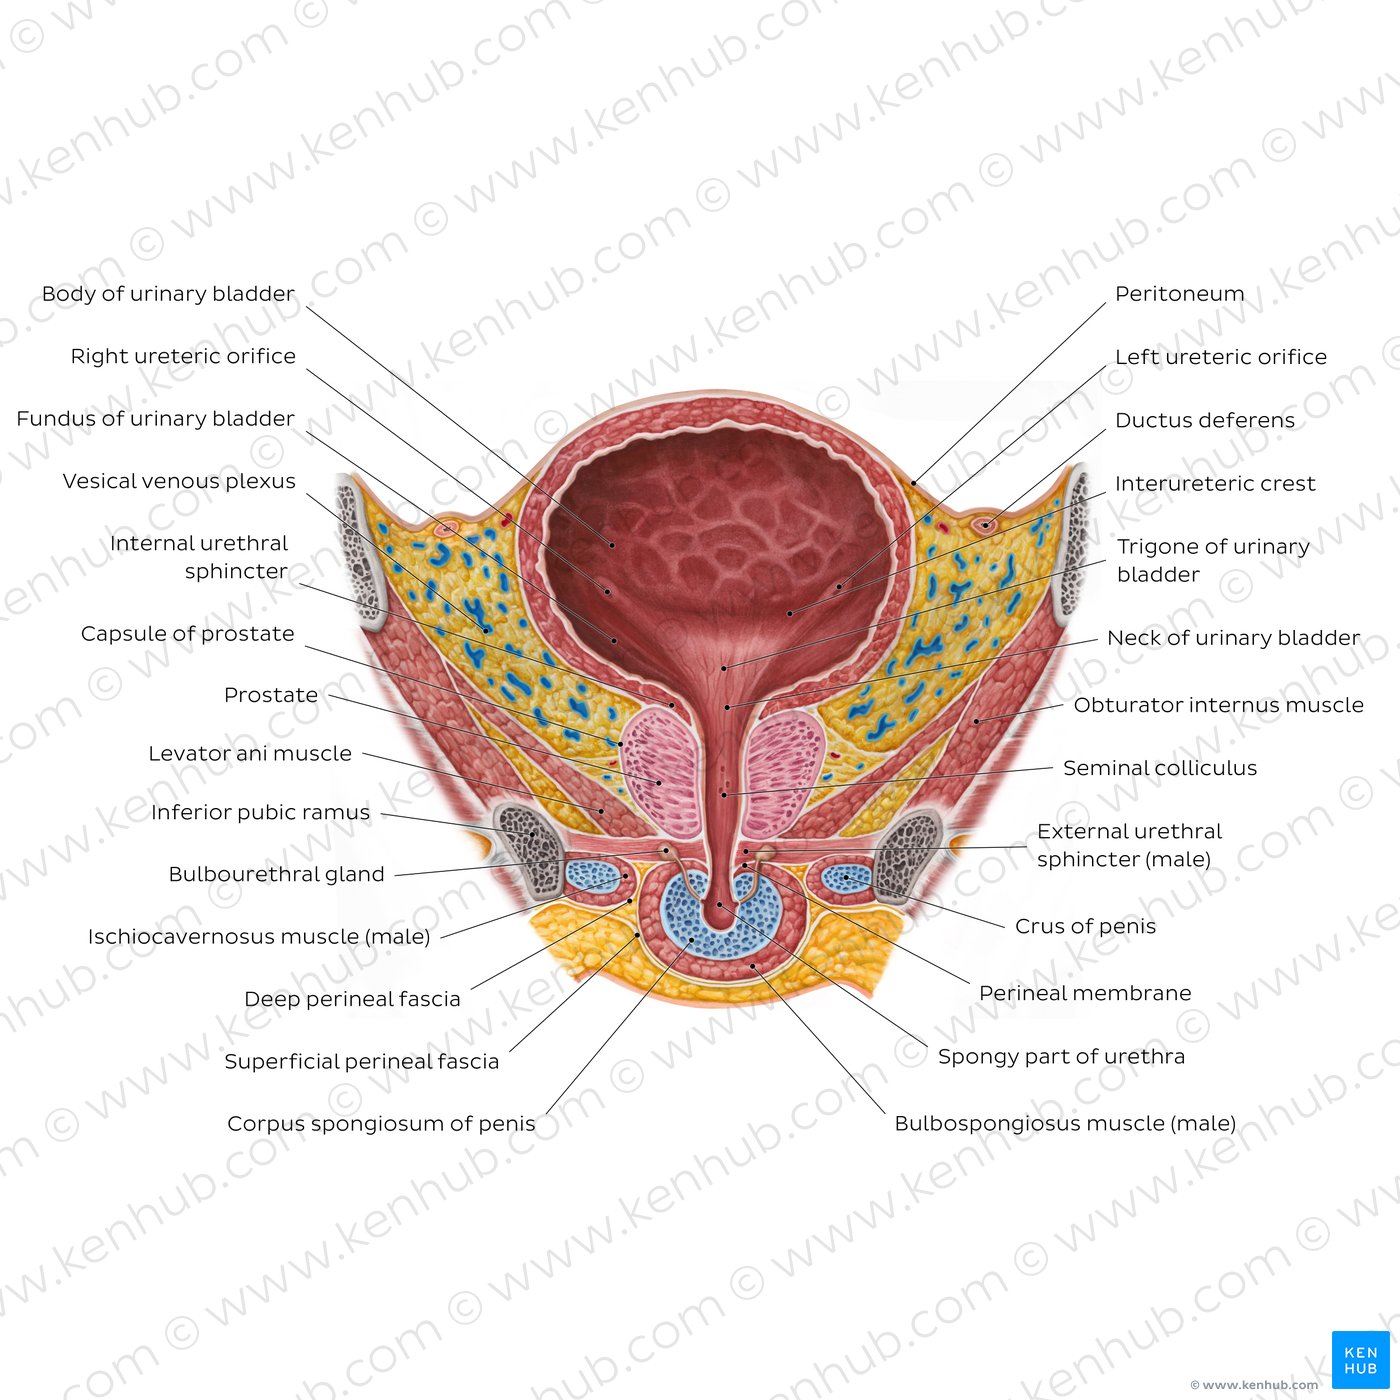 Figure 8. Male urinary bladder.